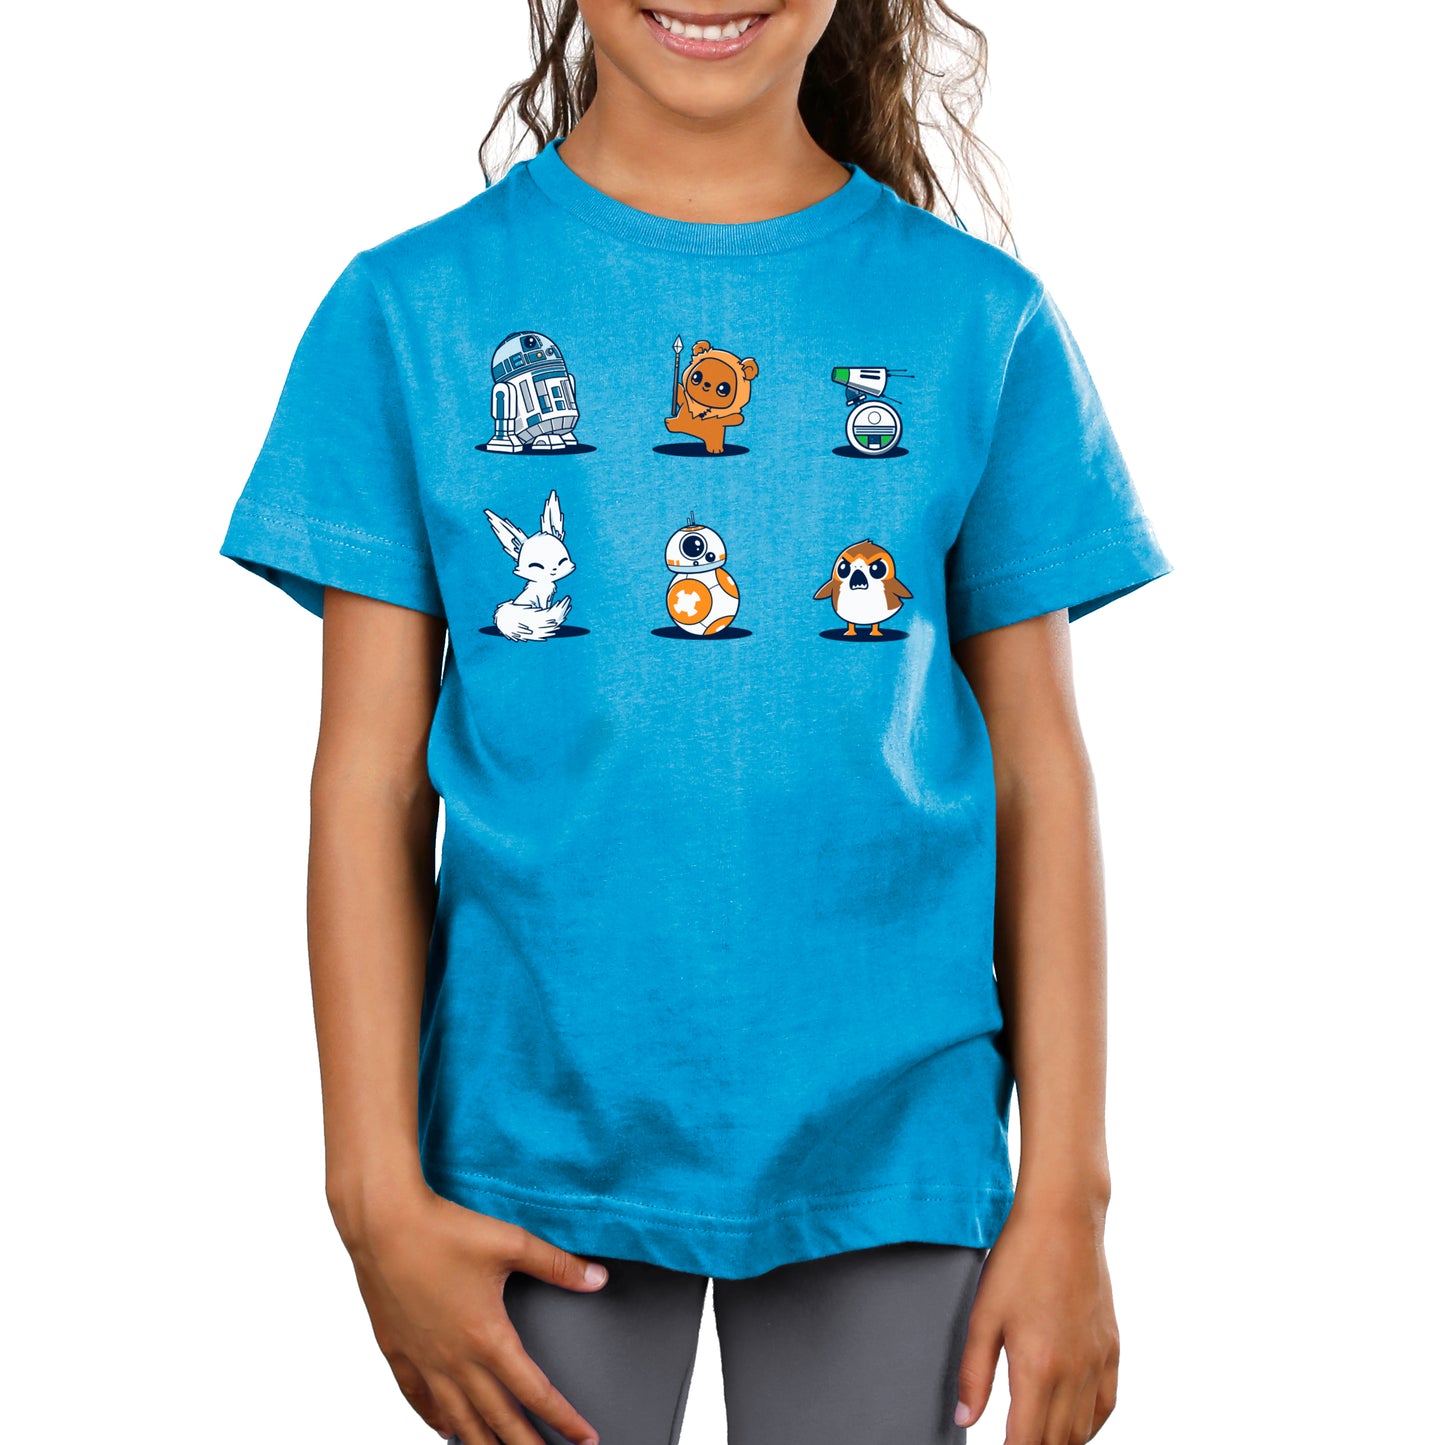 A young girl wearing a blue Star Wars Cuties t-shirt.